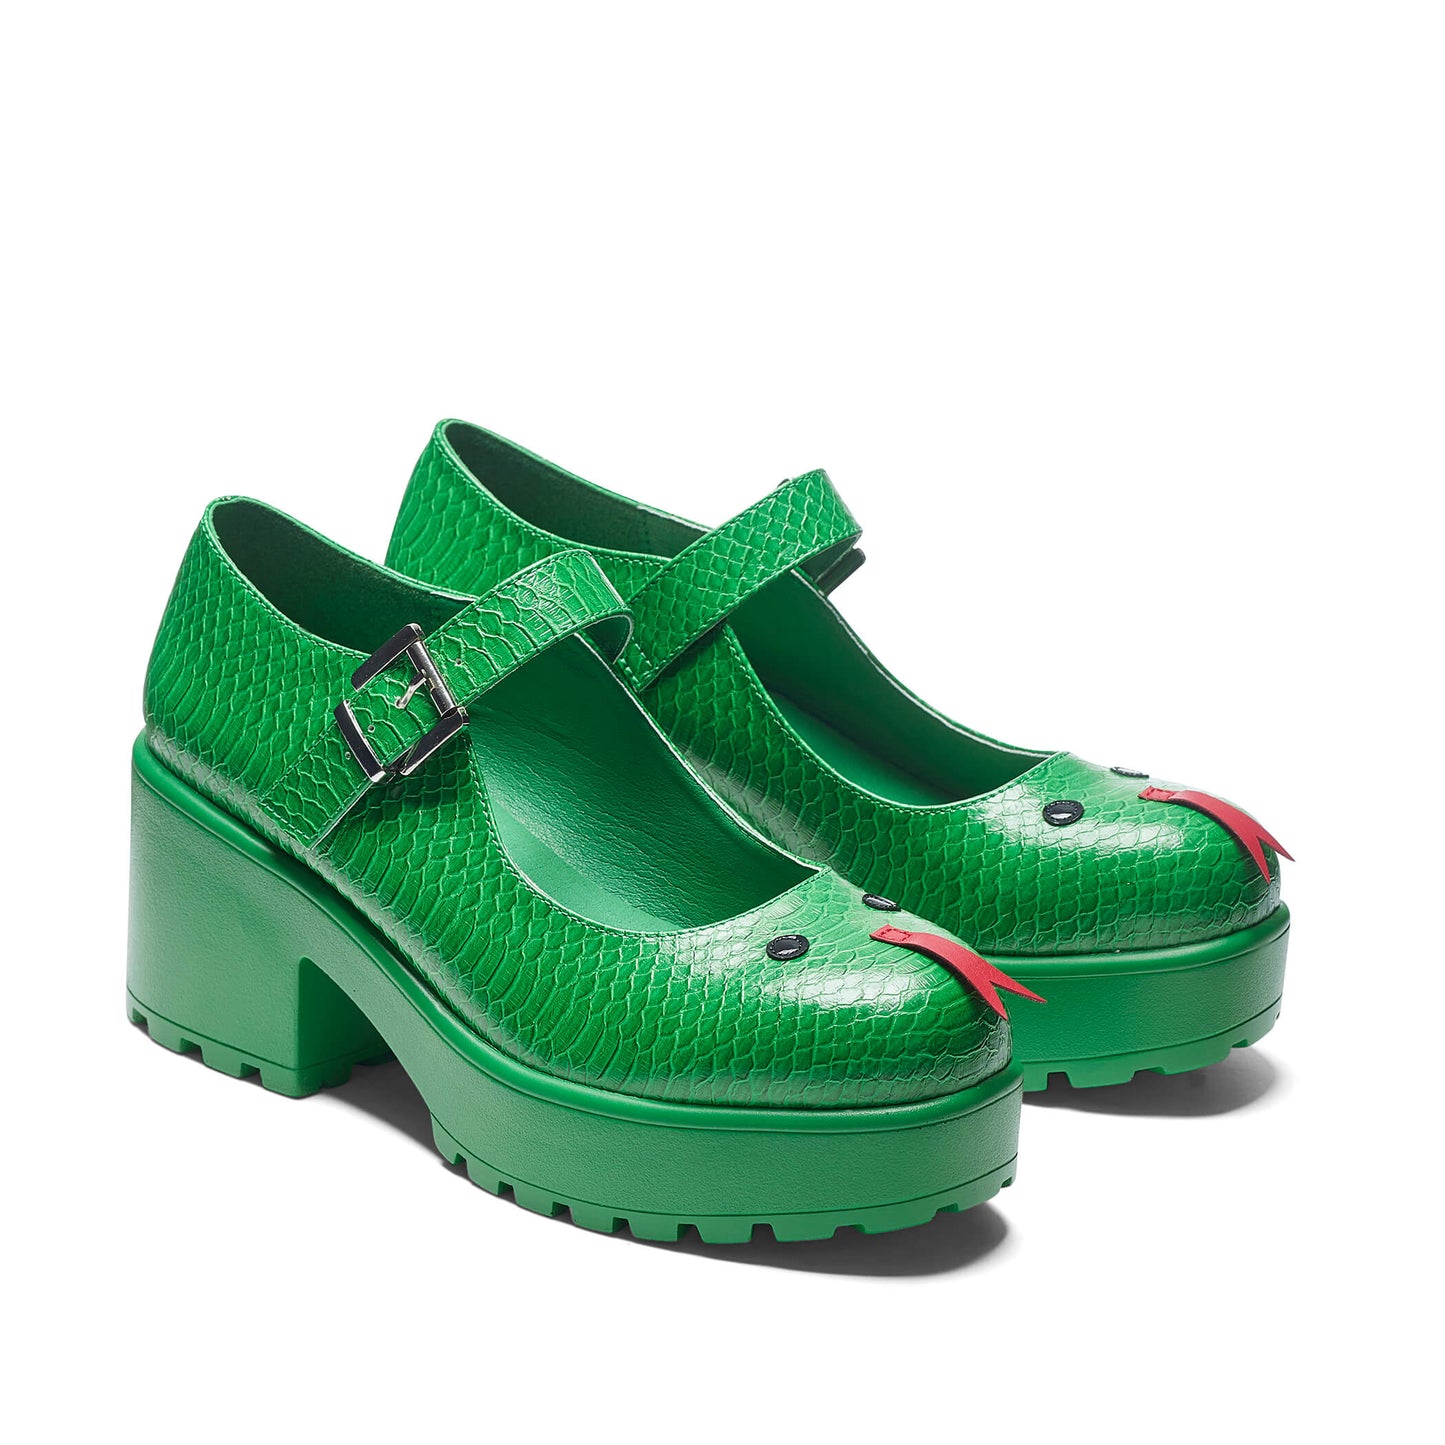 Tira Mary Janes Shoes 'Sassy Snake Edition' - Green - KOI Footwear - Three-Quarter View